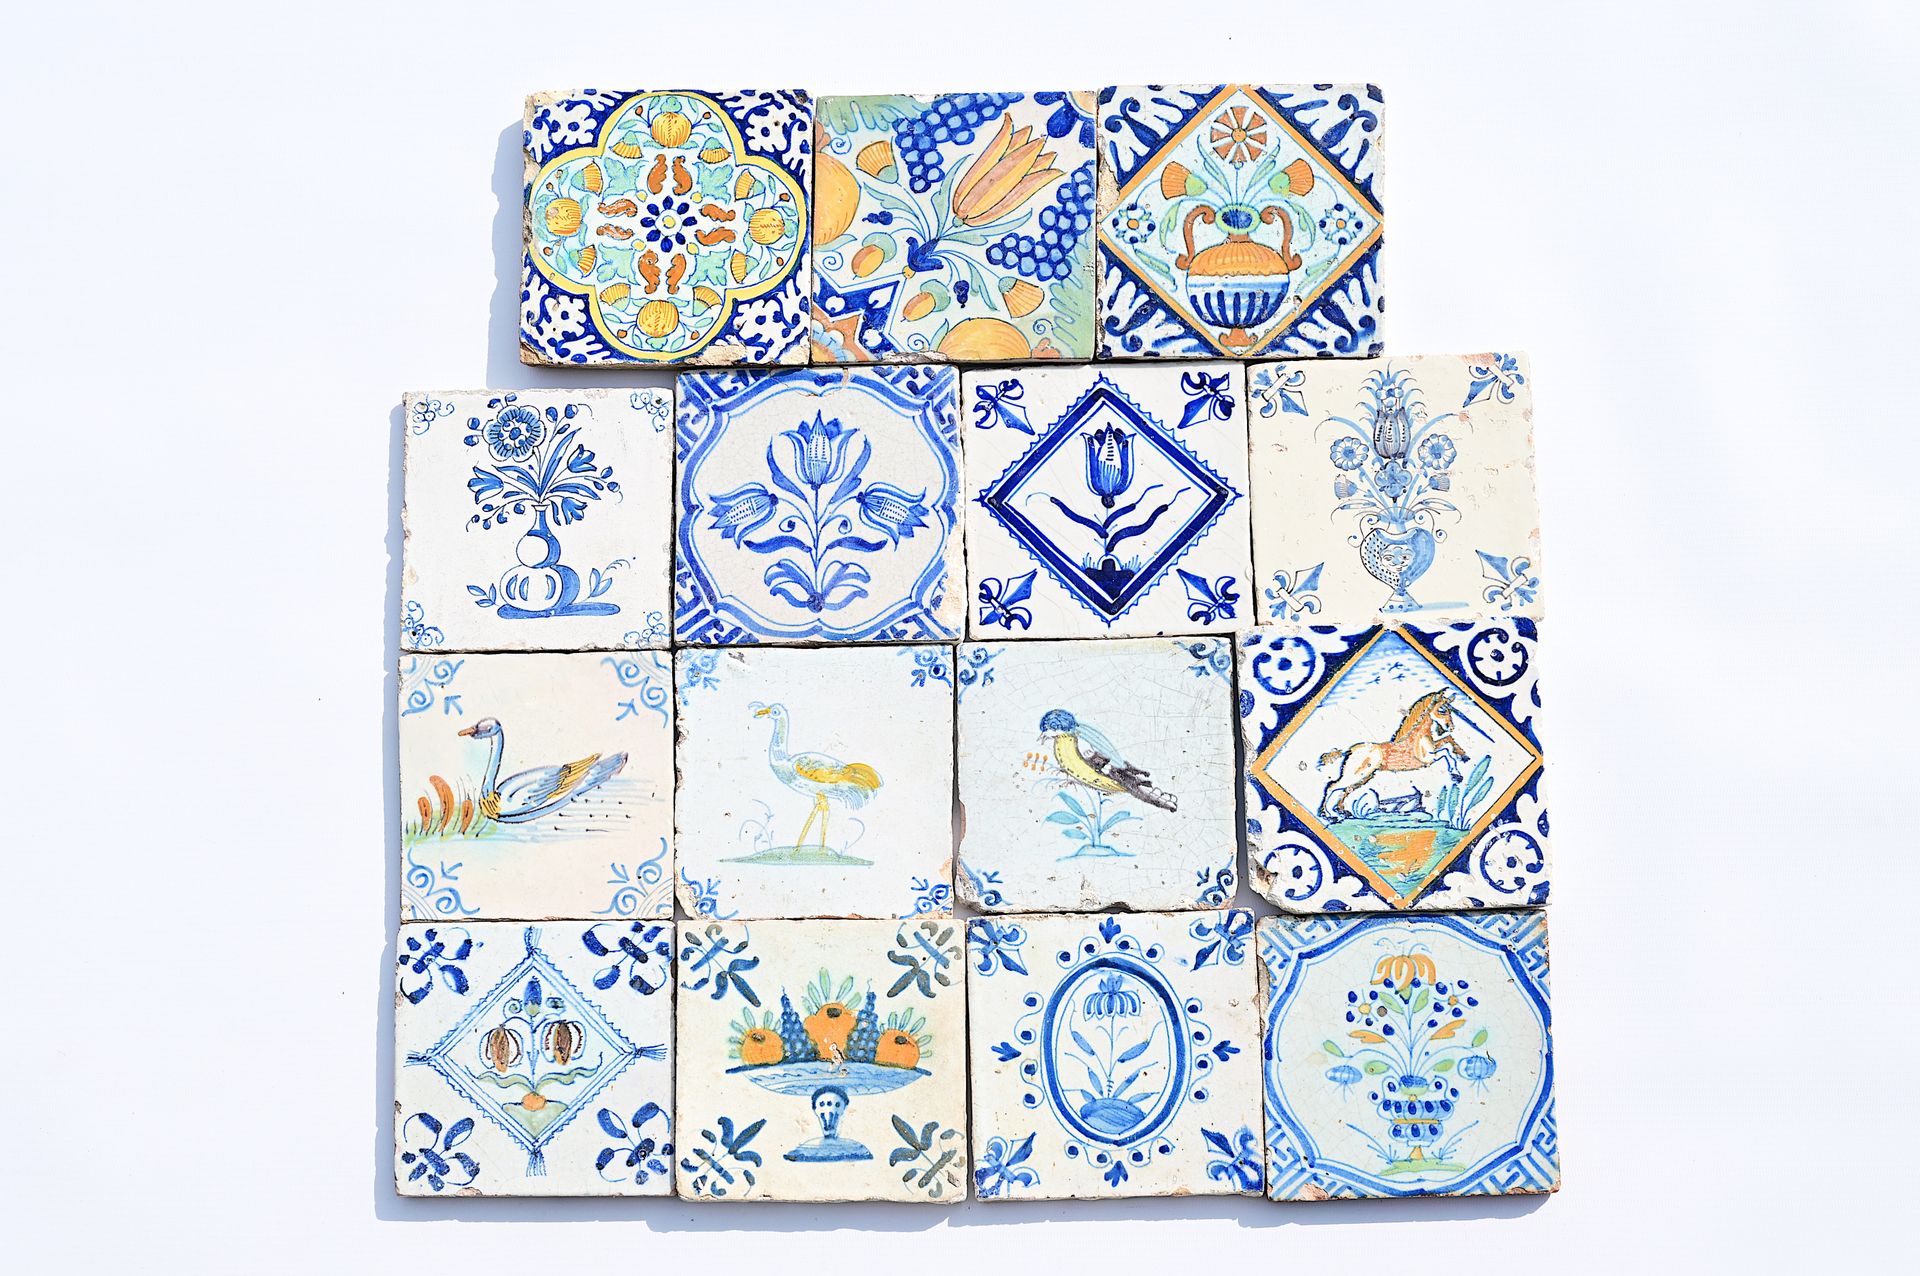 Seventeen blue and white and polychrome Dutch Delft tiles, 17th C. Diecisiete az&hellip;